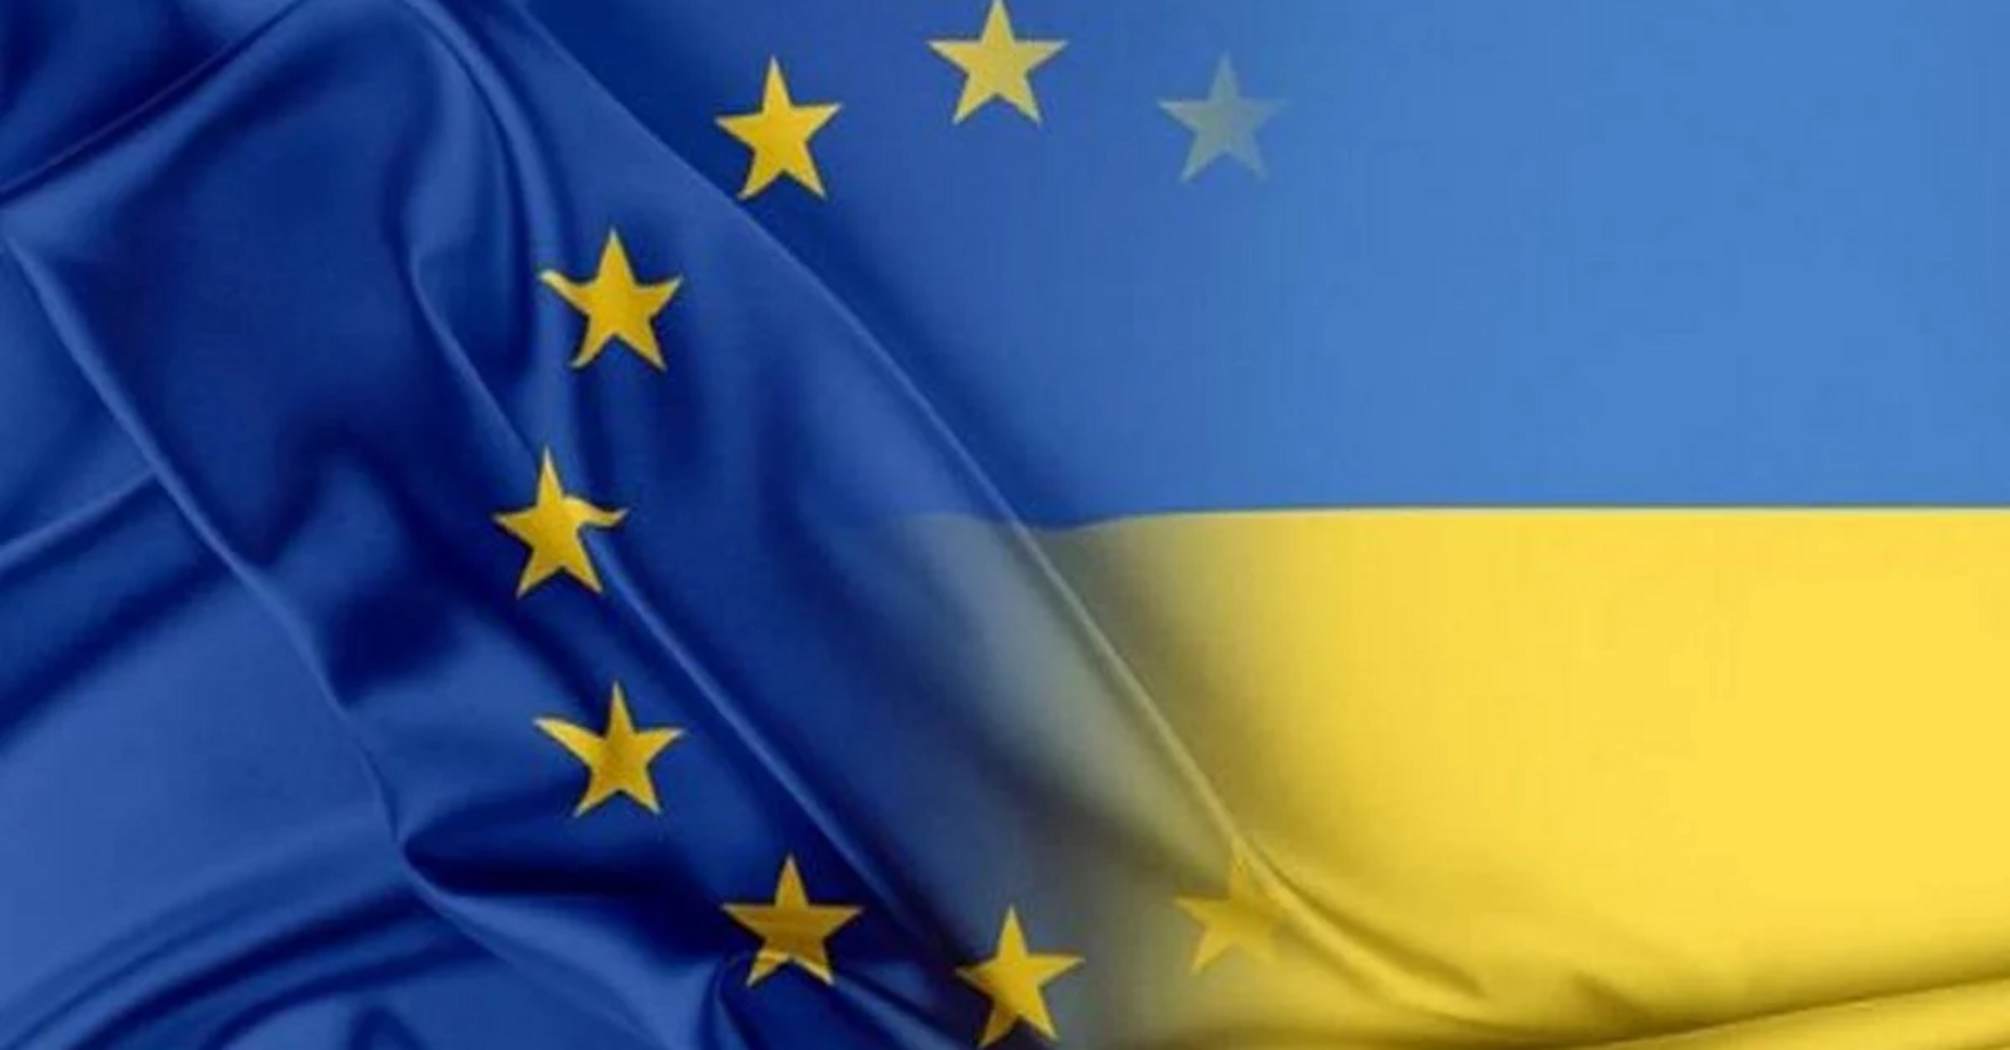 Brussels is pushing to begin formal talks on Ukraine's EU membership as early as June 25 - Politico